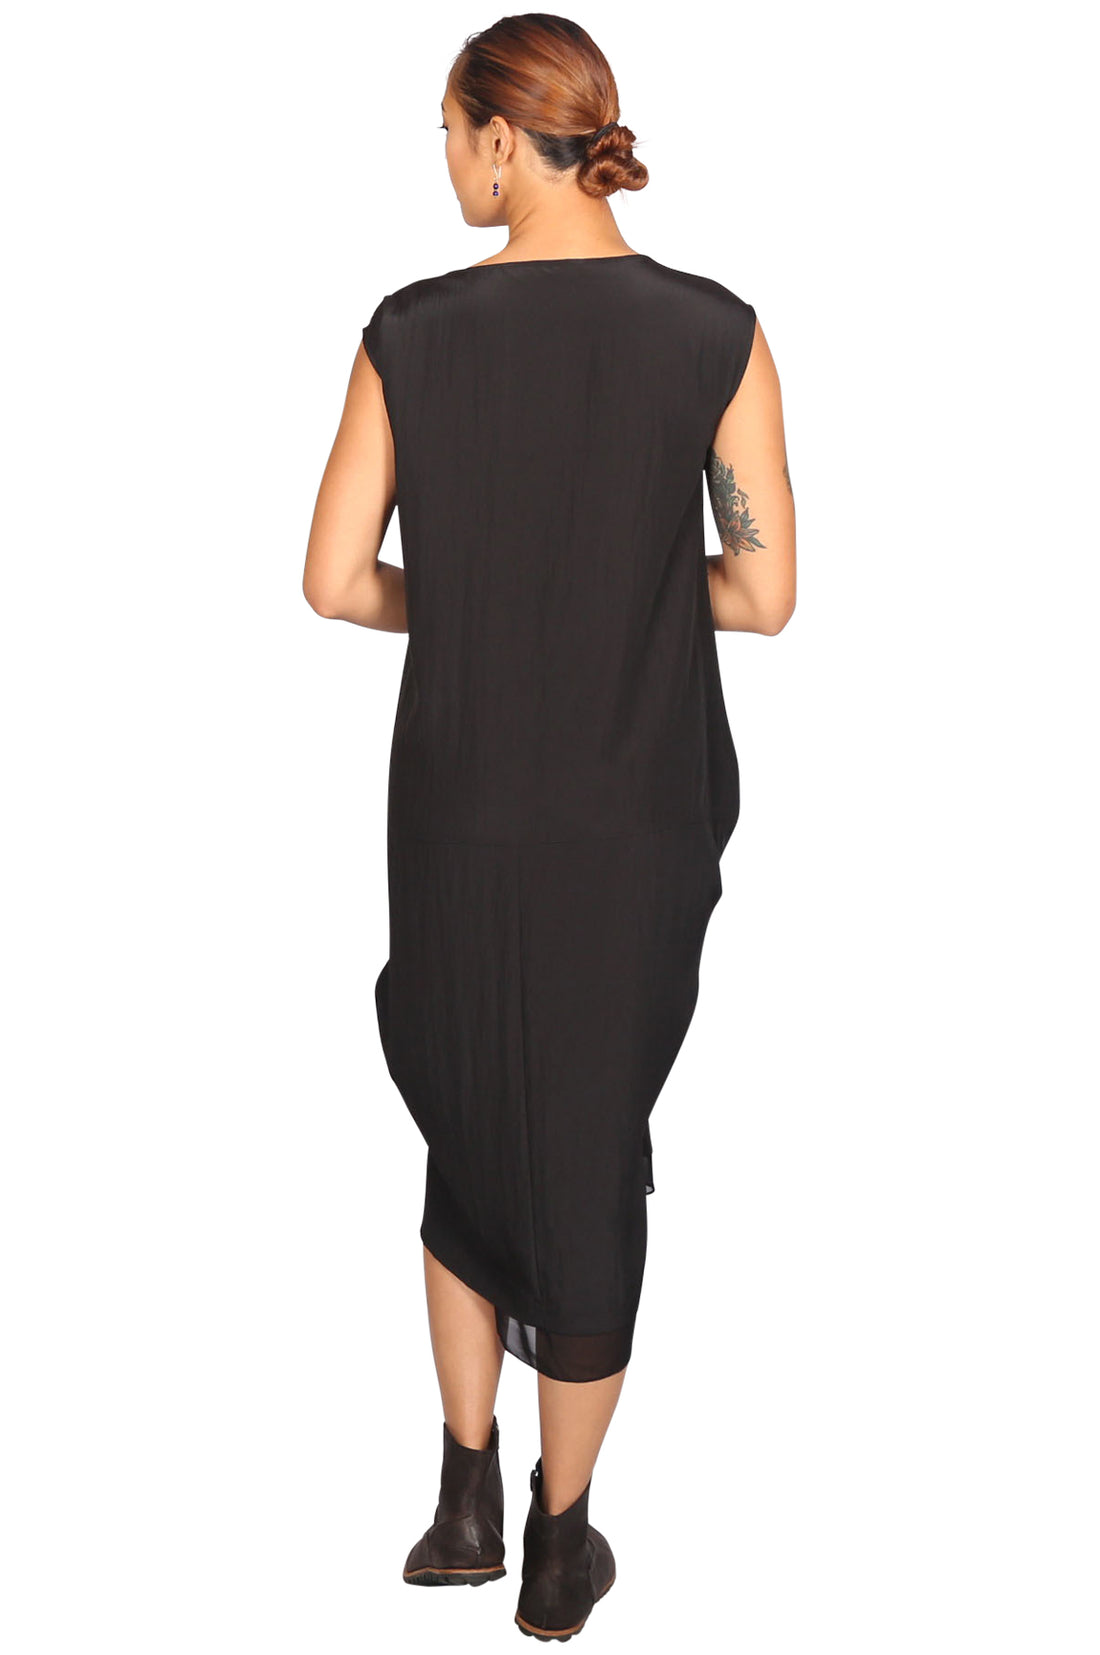 Moyuru Black Dress with Contrast Hem